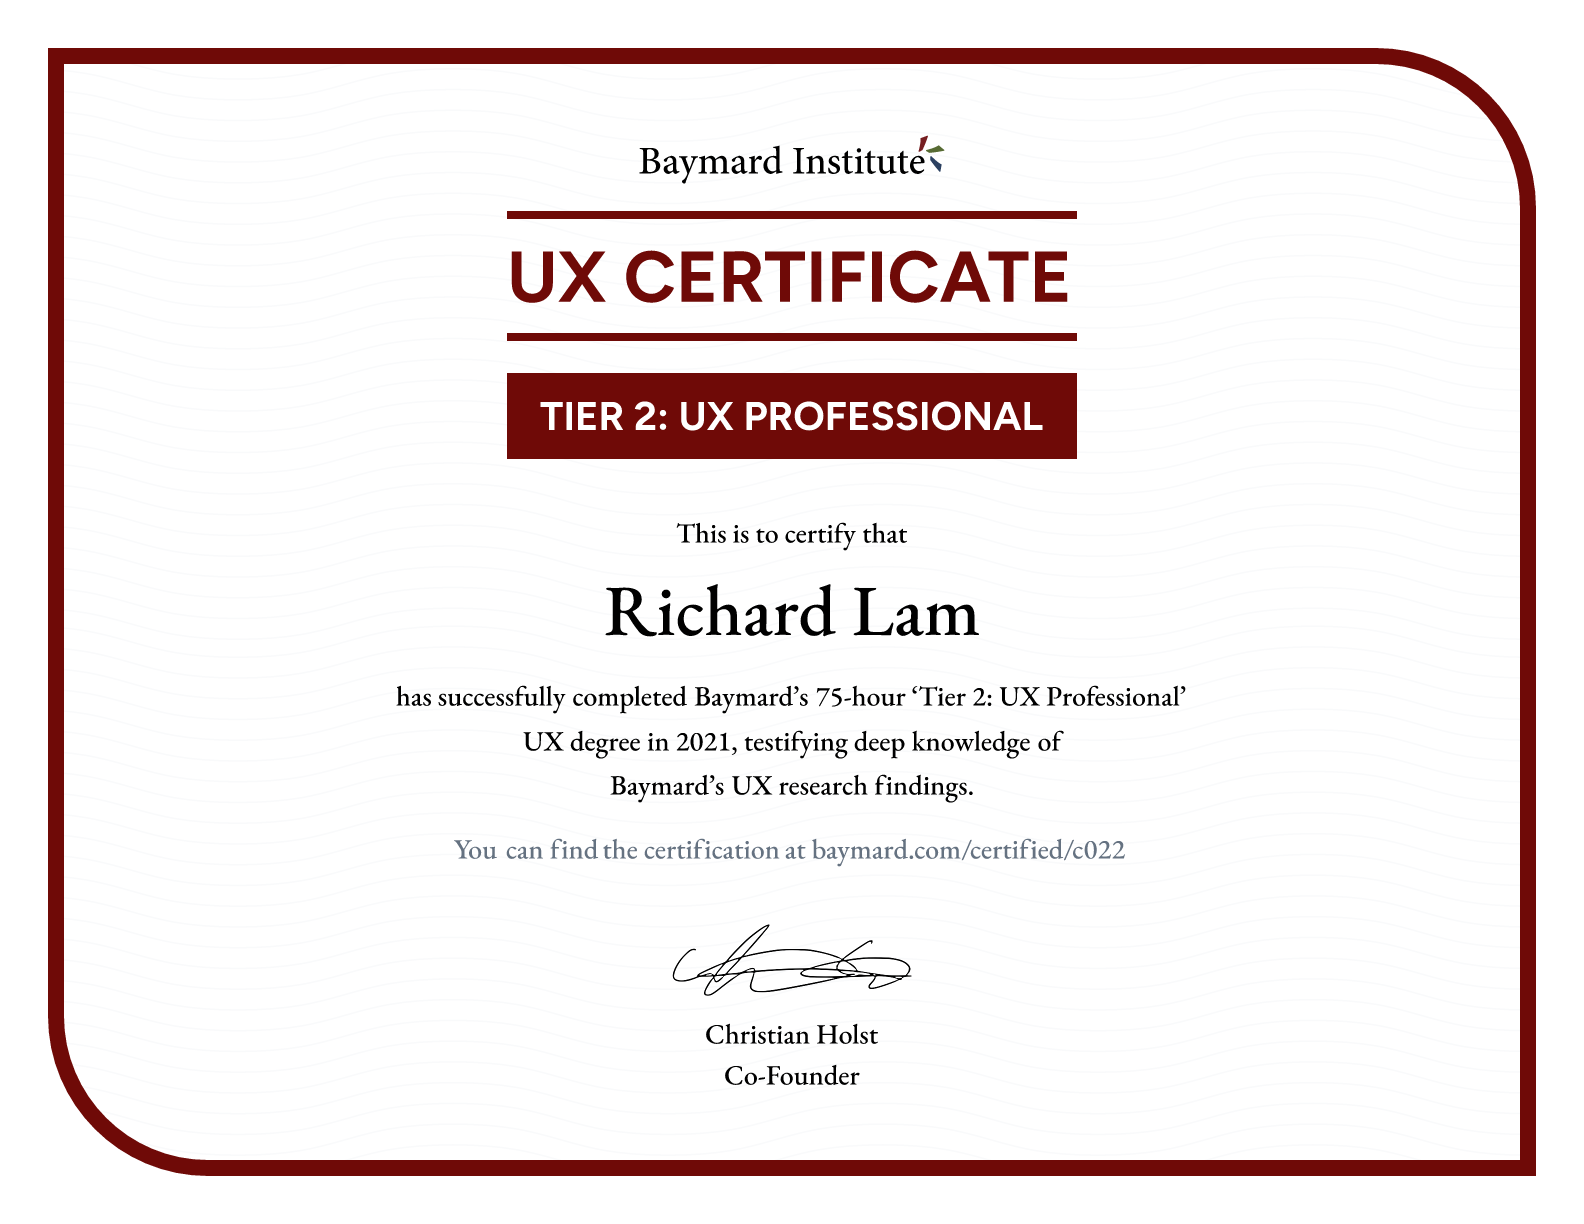 Richard Lam’s certificate